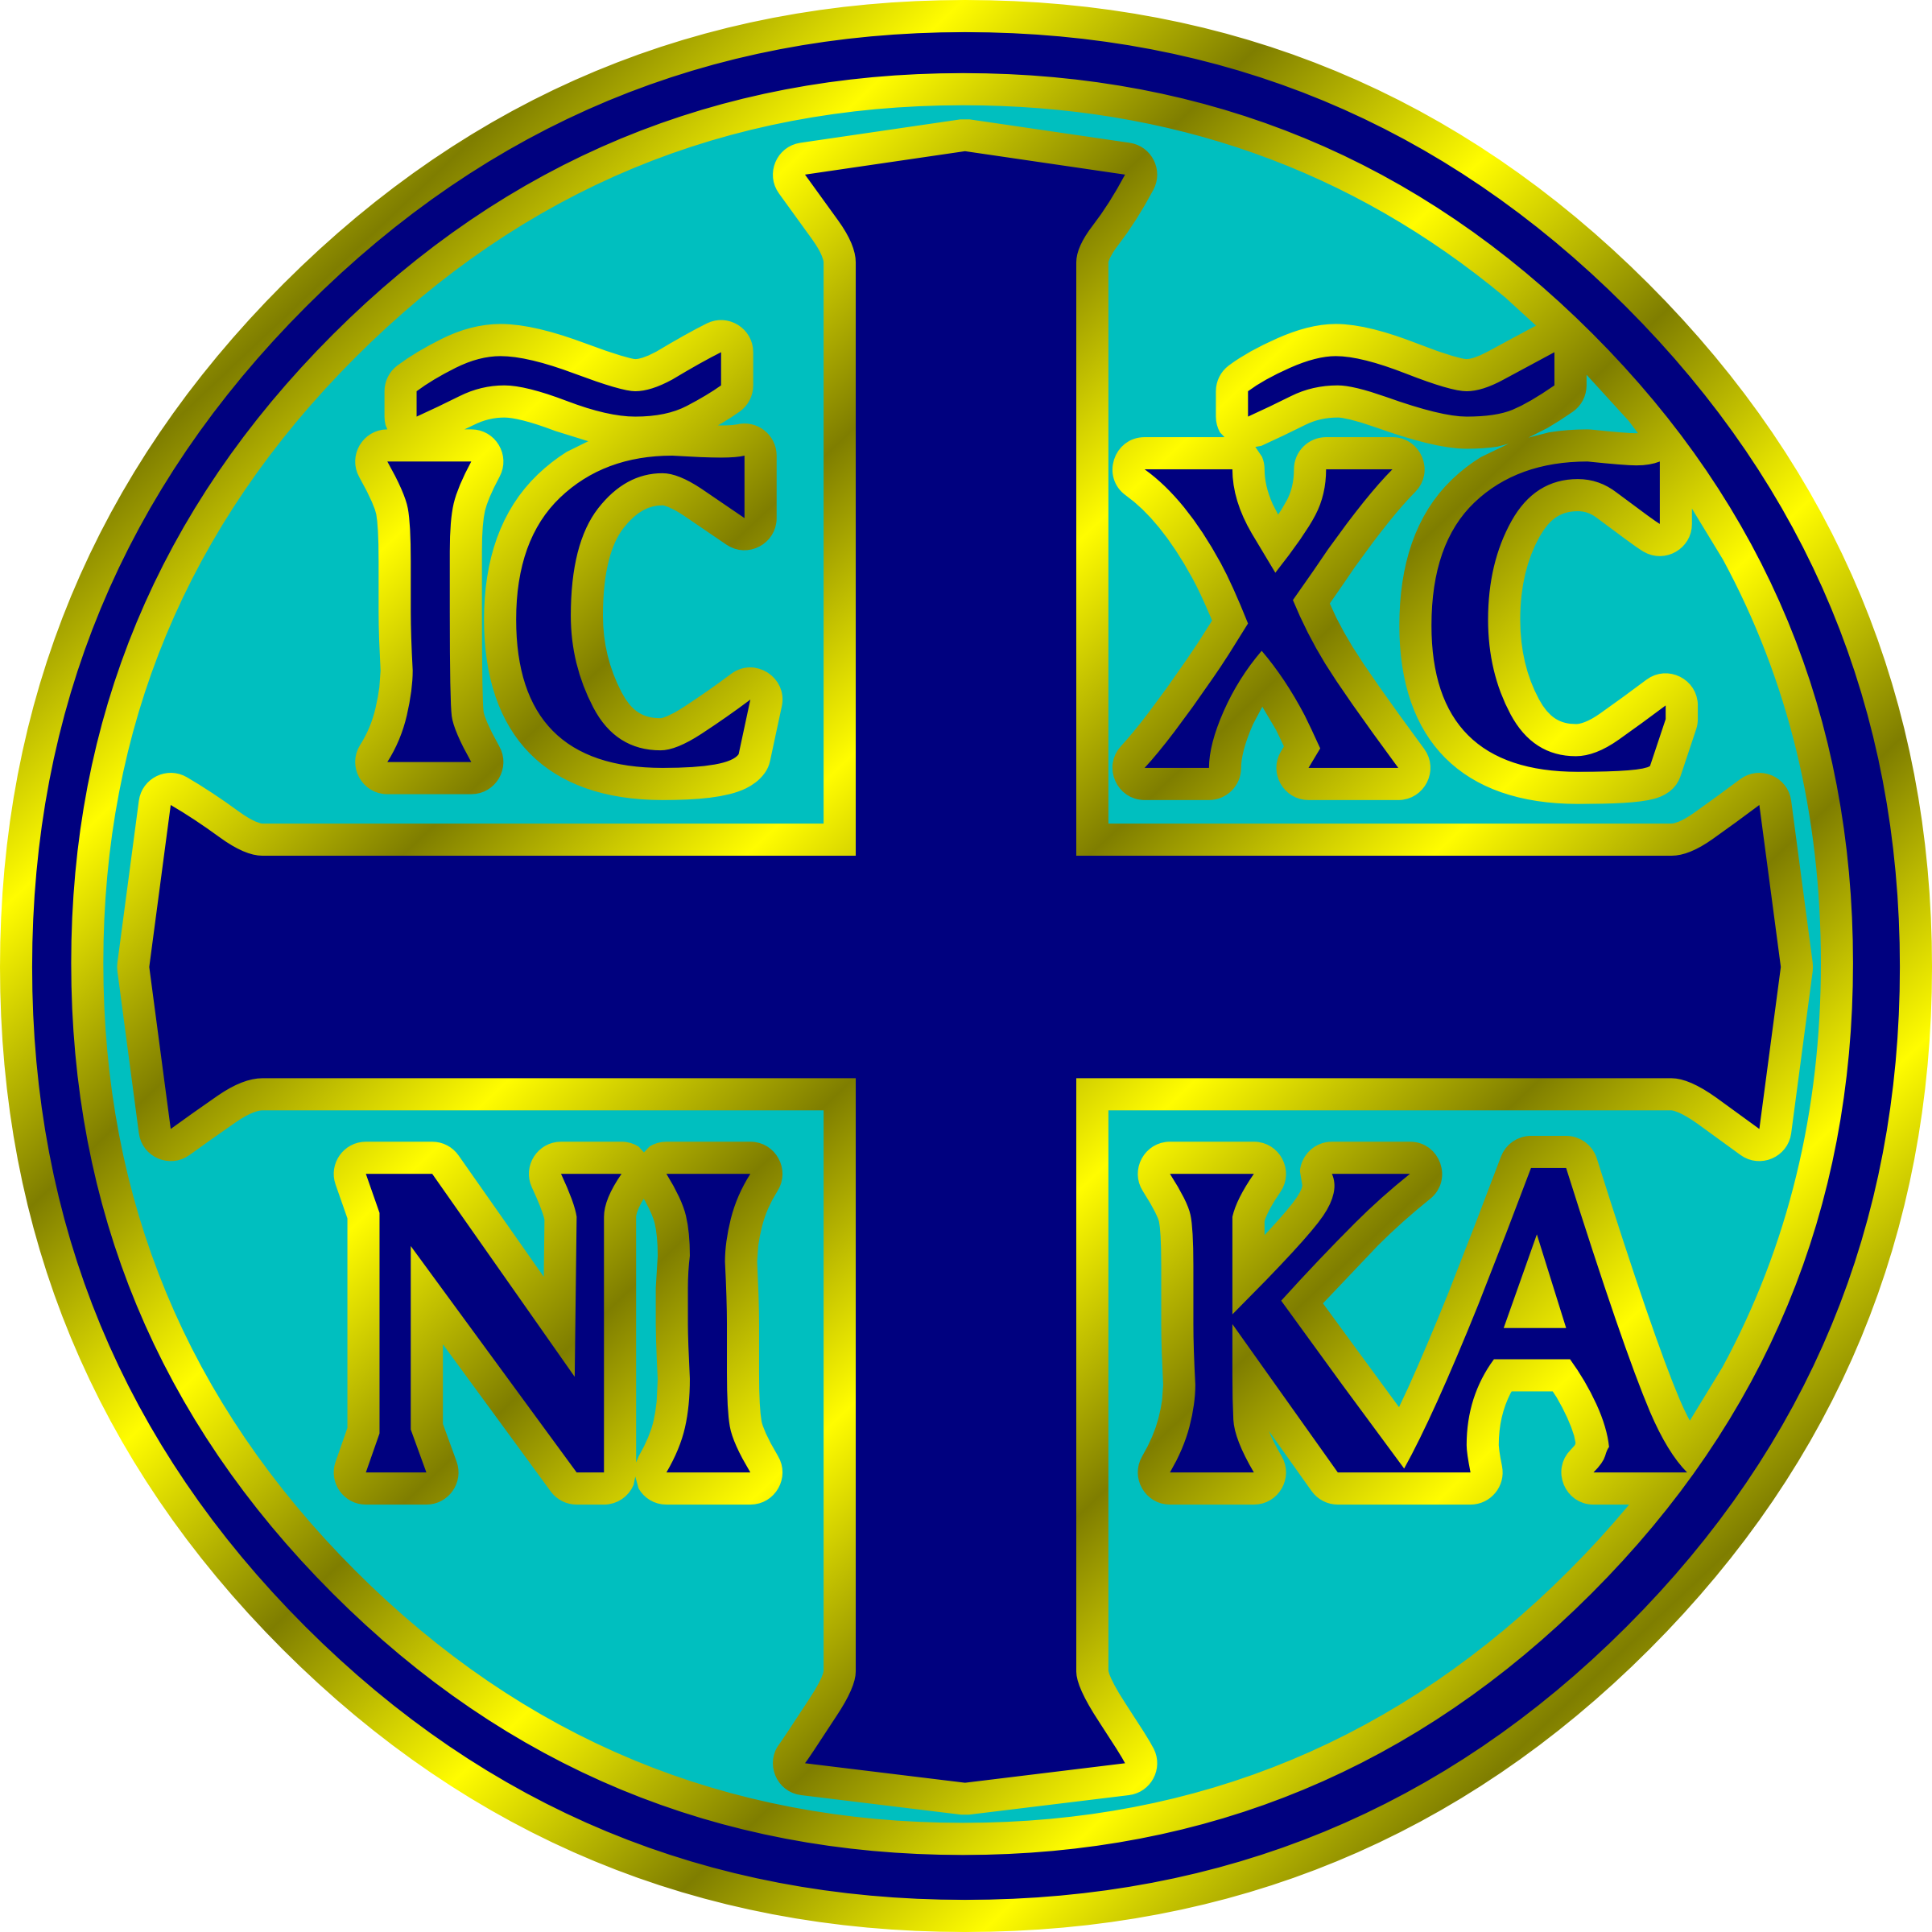 IC XC NIKA PNG icon